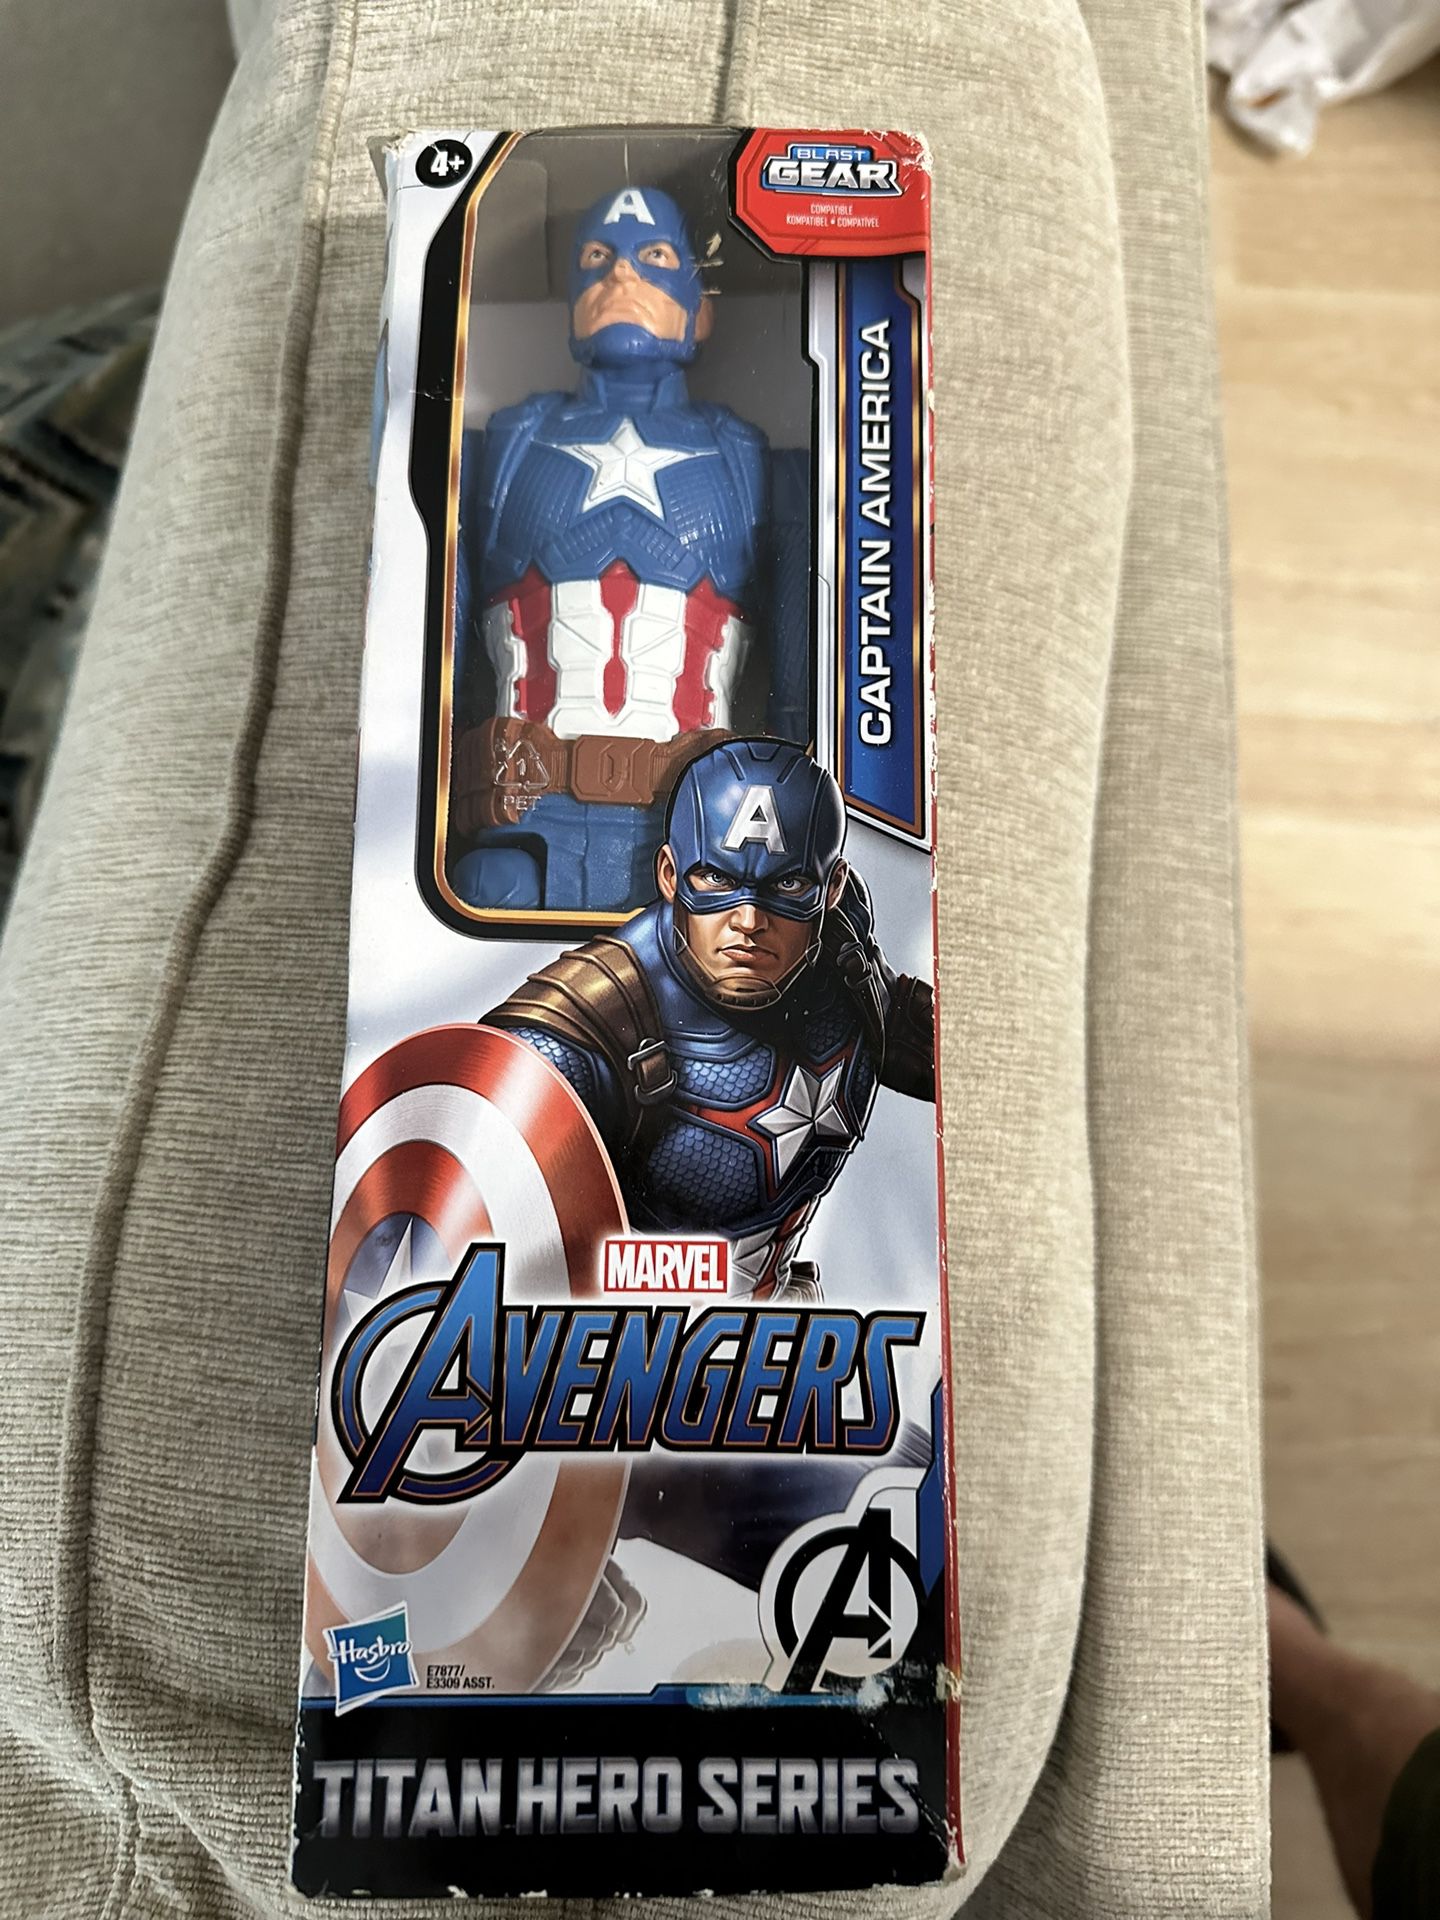 Marvel Avengers  Titan Hero Series  Captain America  Action Figure - 12 Inch Toy